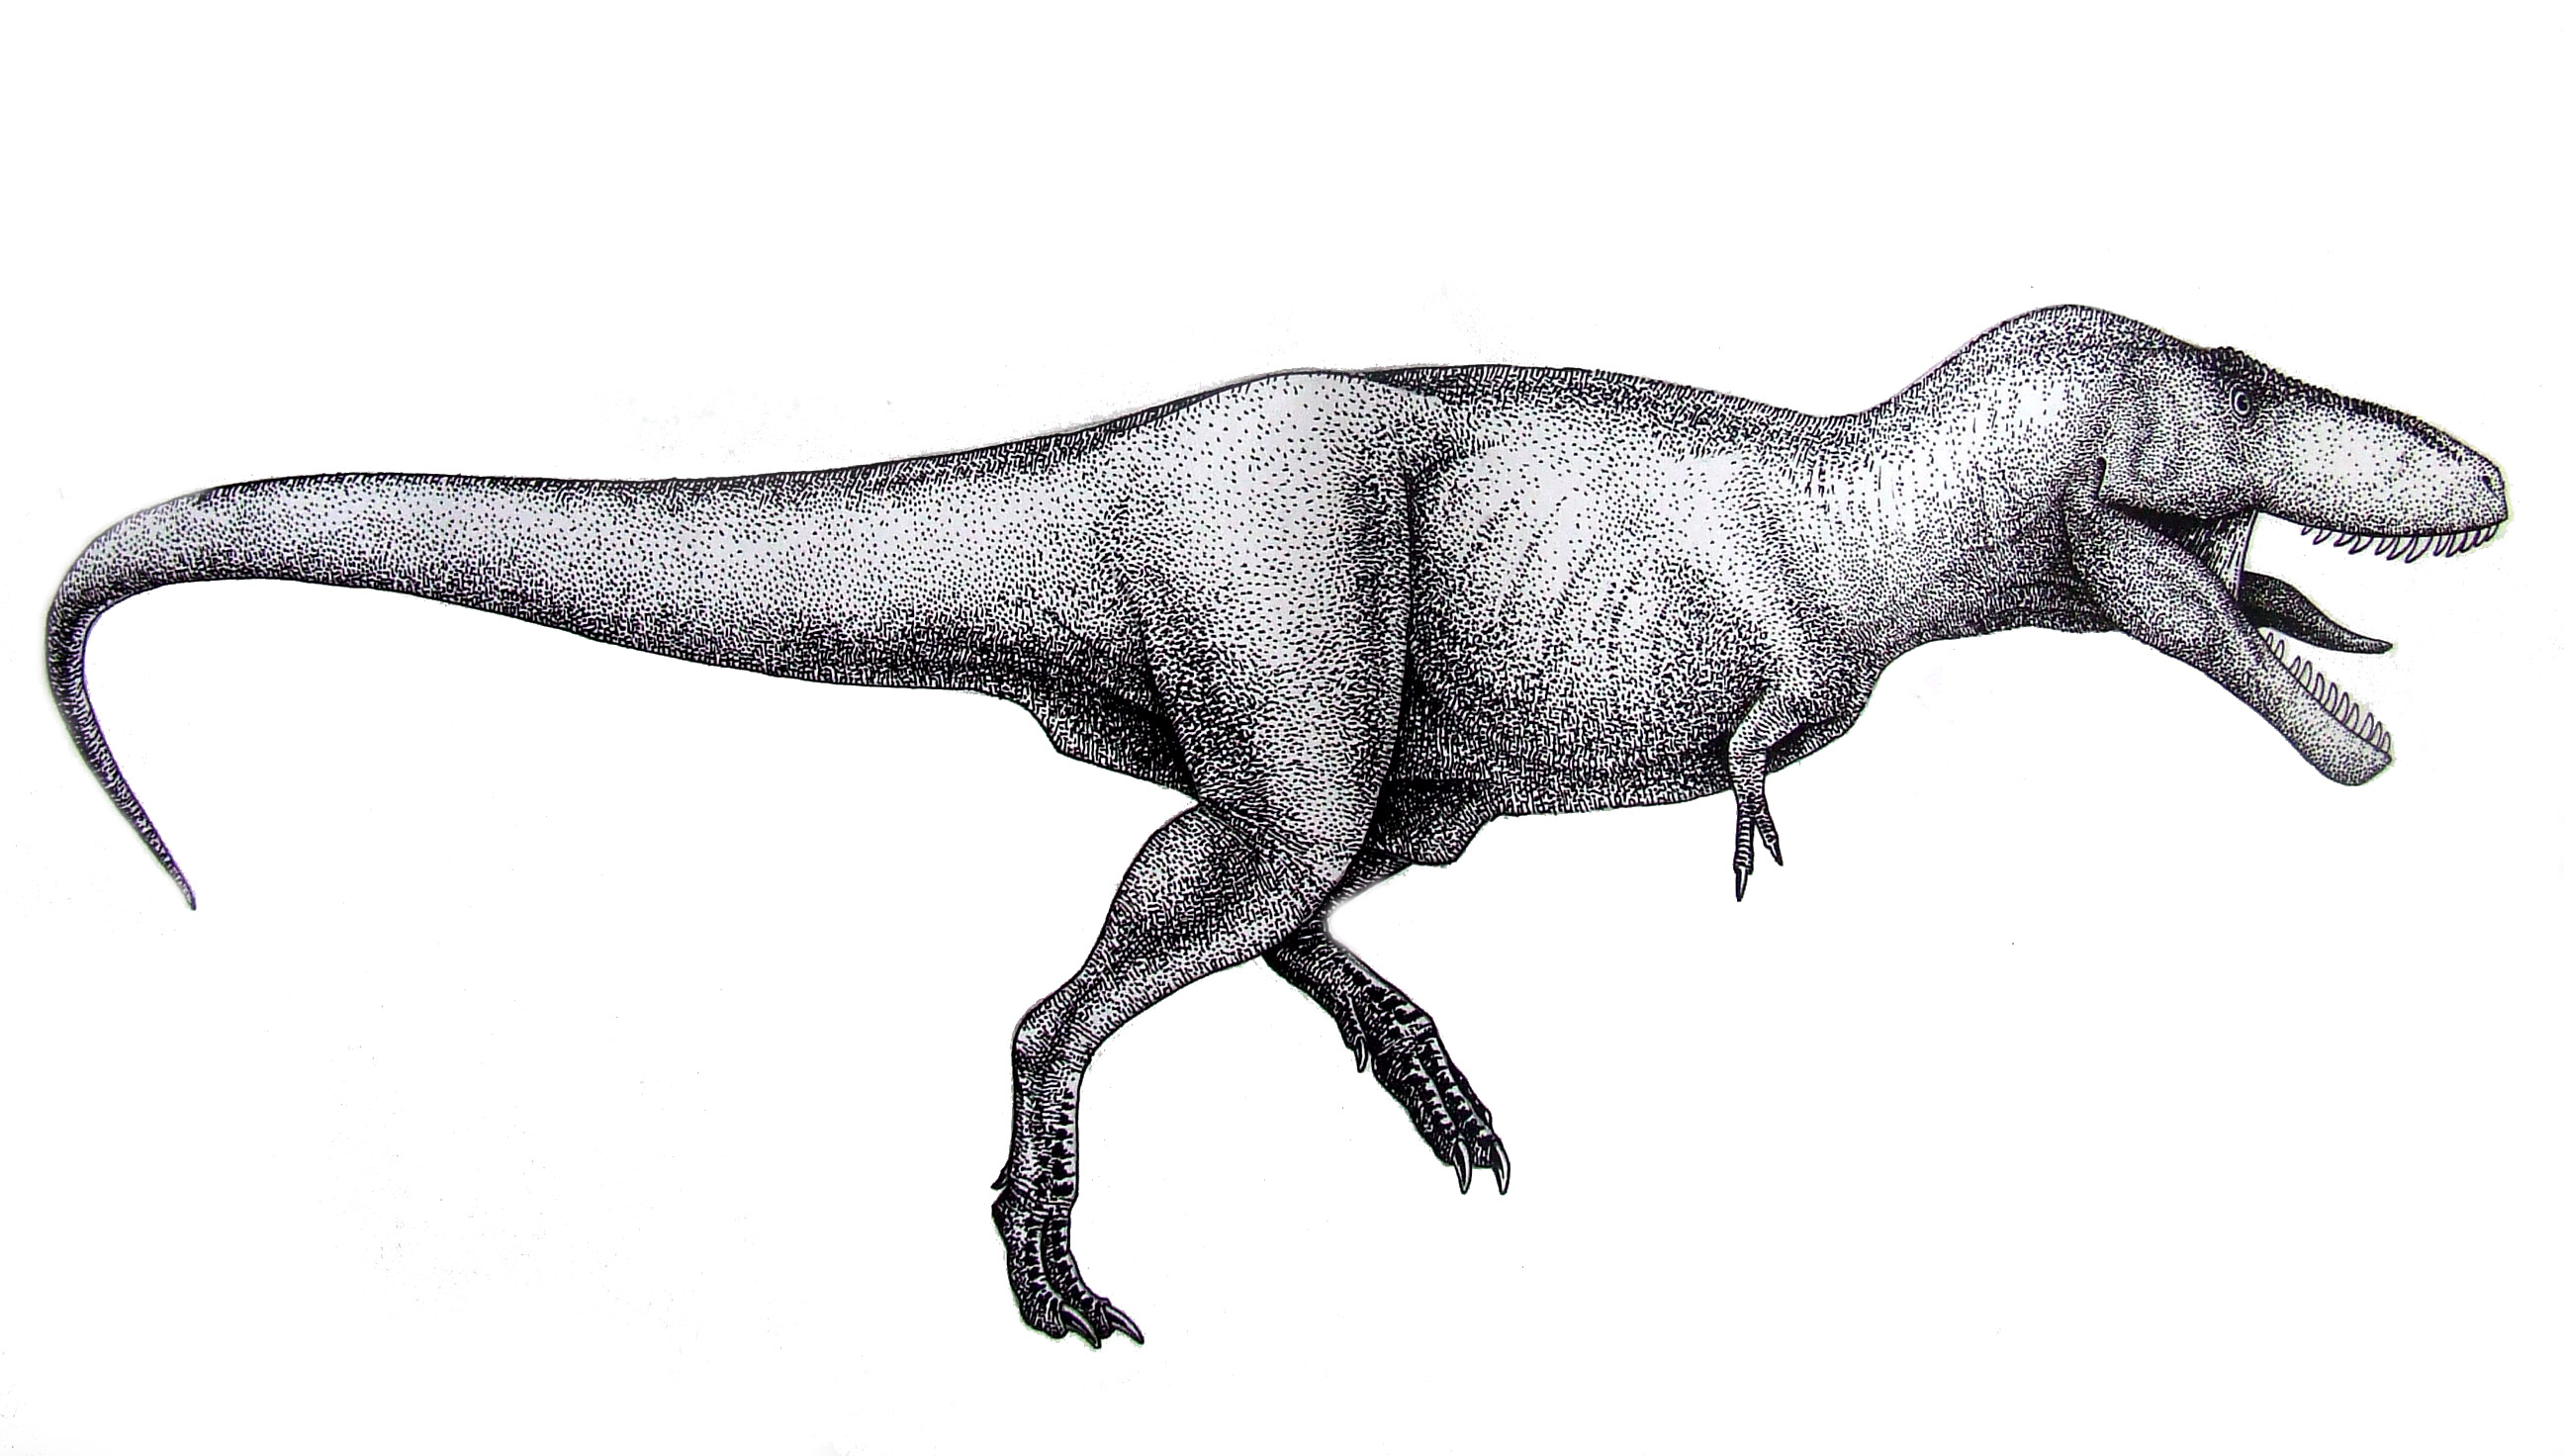 Tyrannosaurus Rex Information and Gallery.